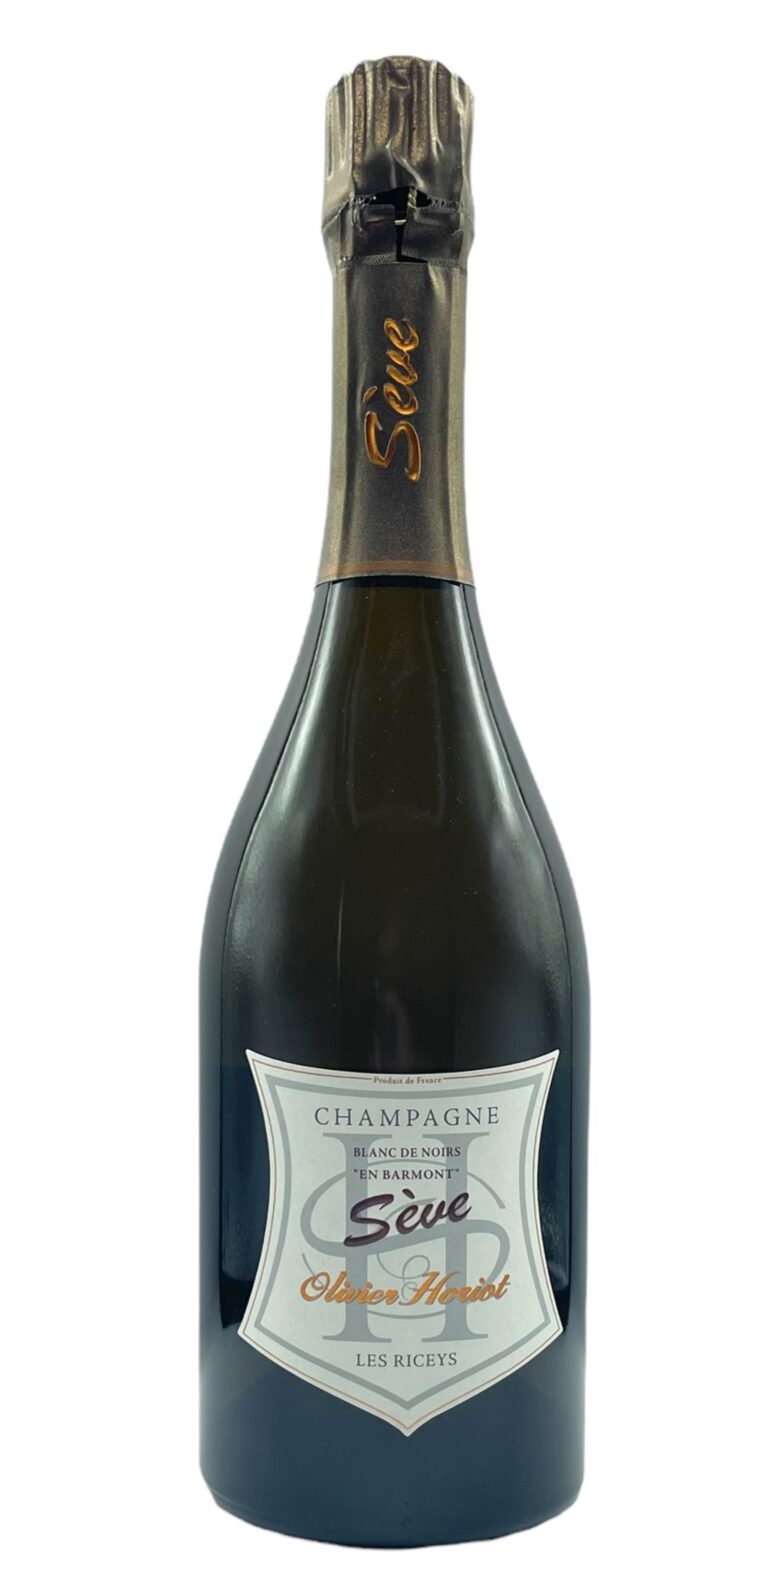 Sève "En Barmont" 2014, Champagne Olivier Horiot